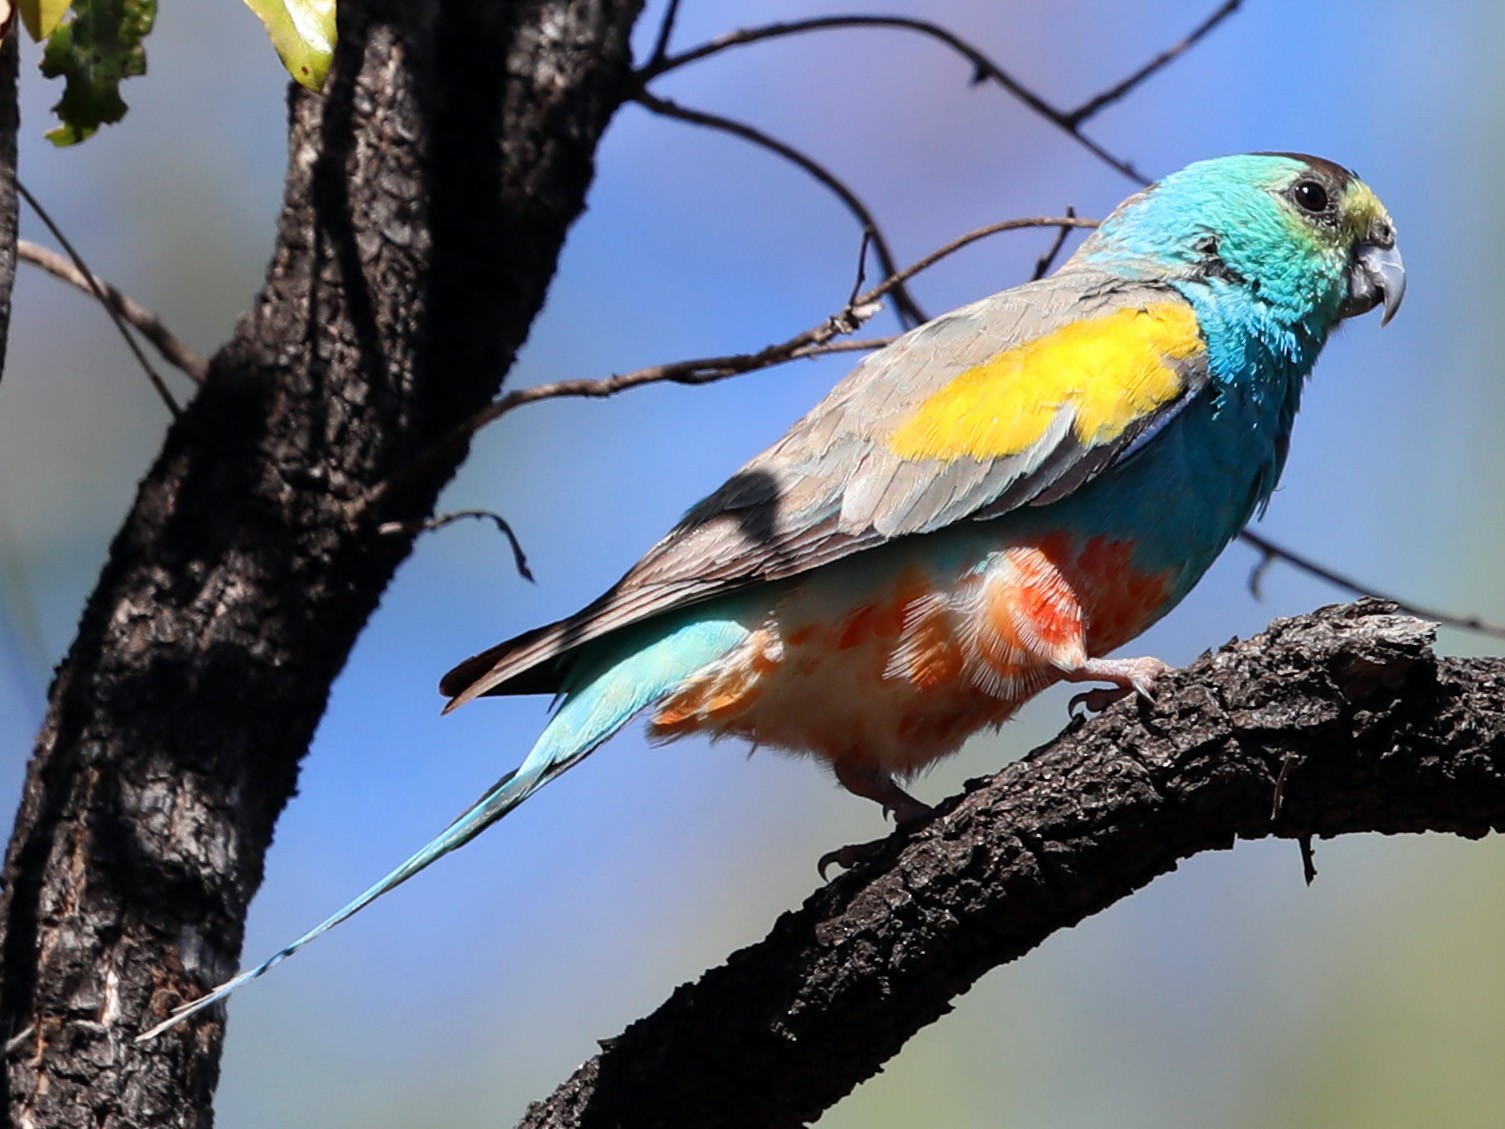 Golden-shouldered Parrot - Doug Herrington || Birdwatching Tropical Australia Tours